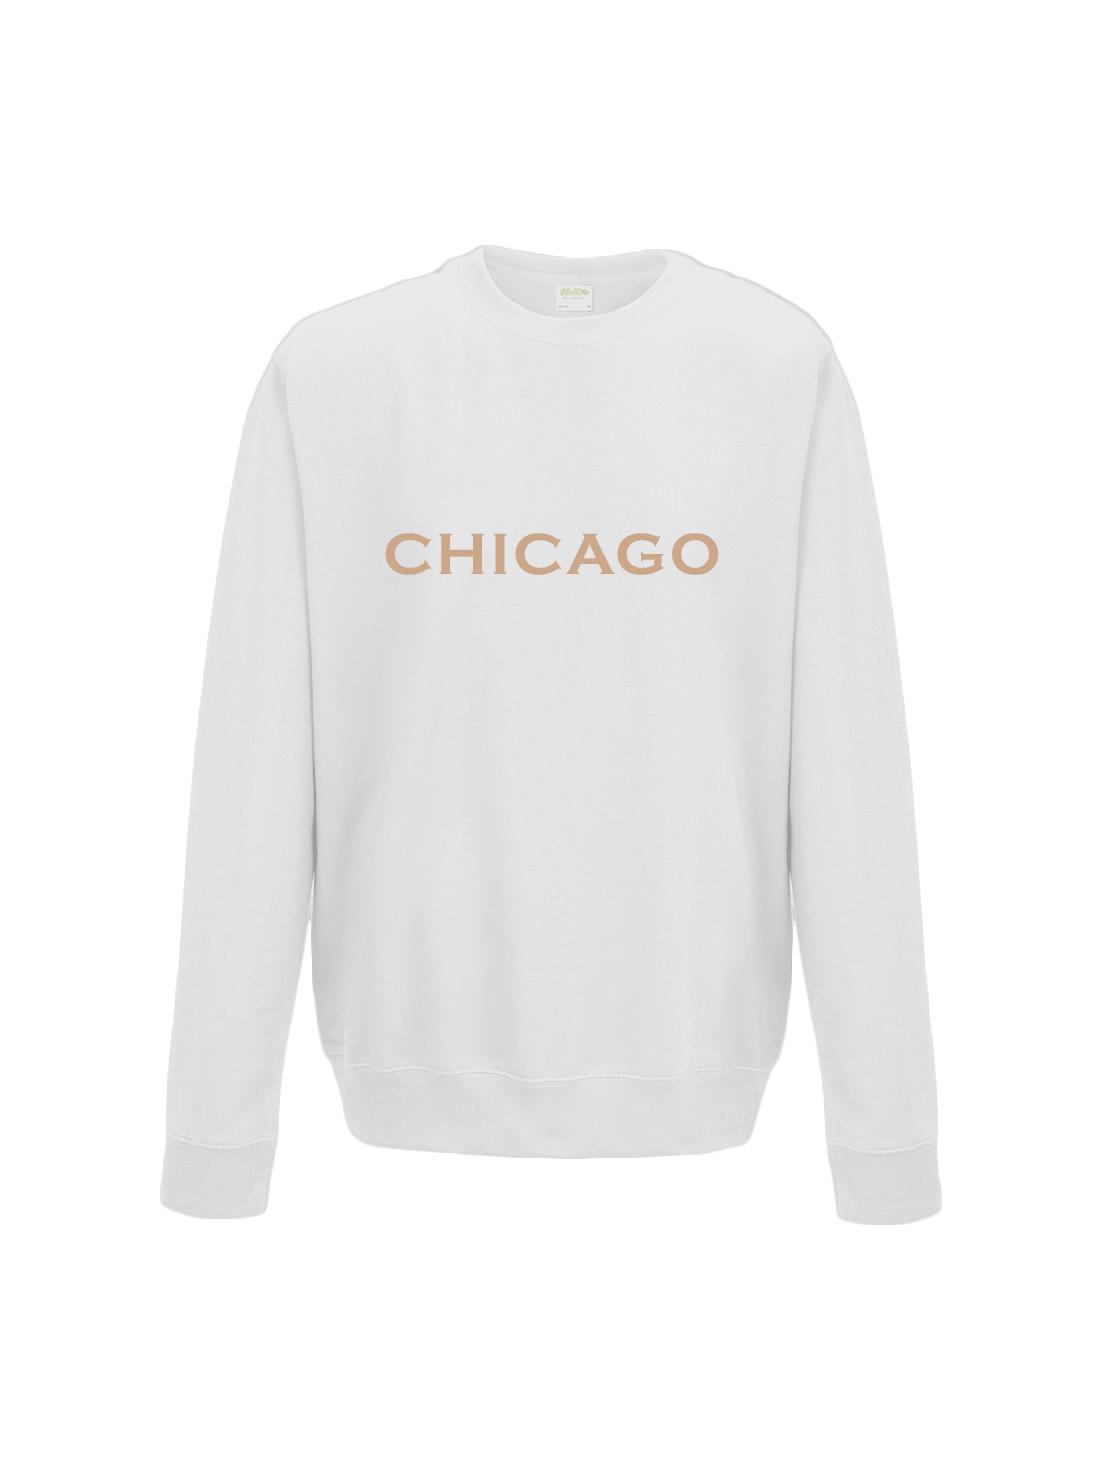 CHICAGO sweatshirt